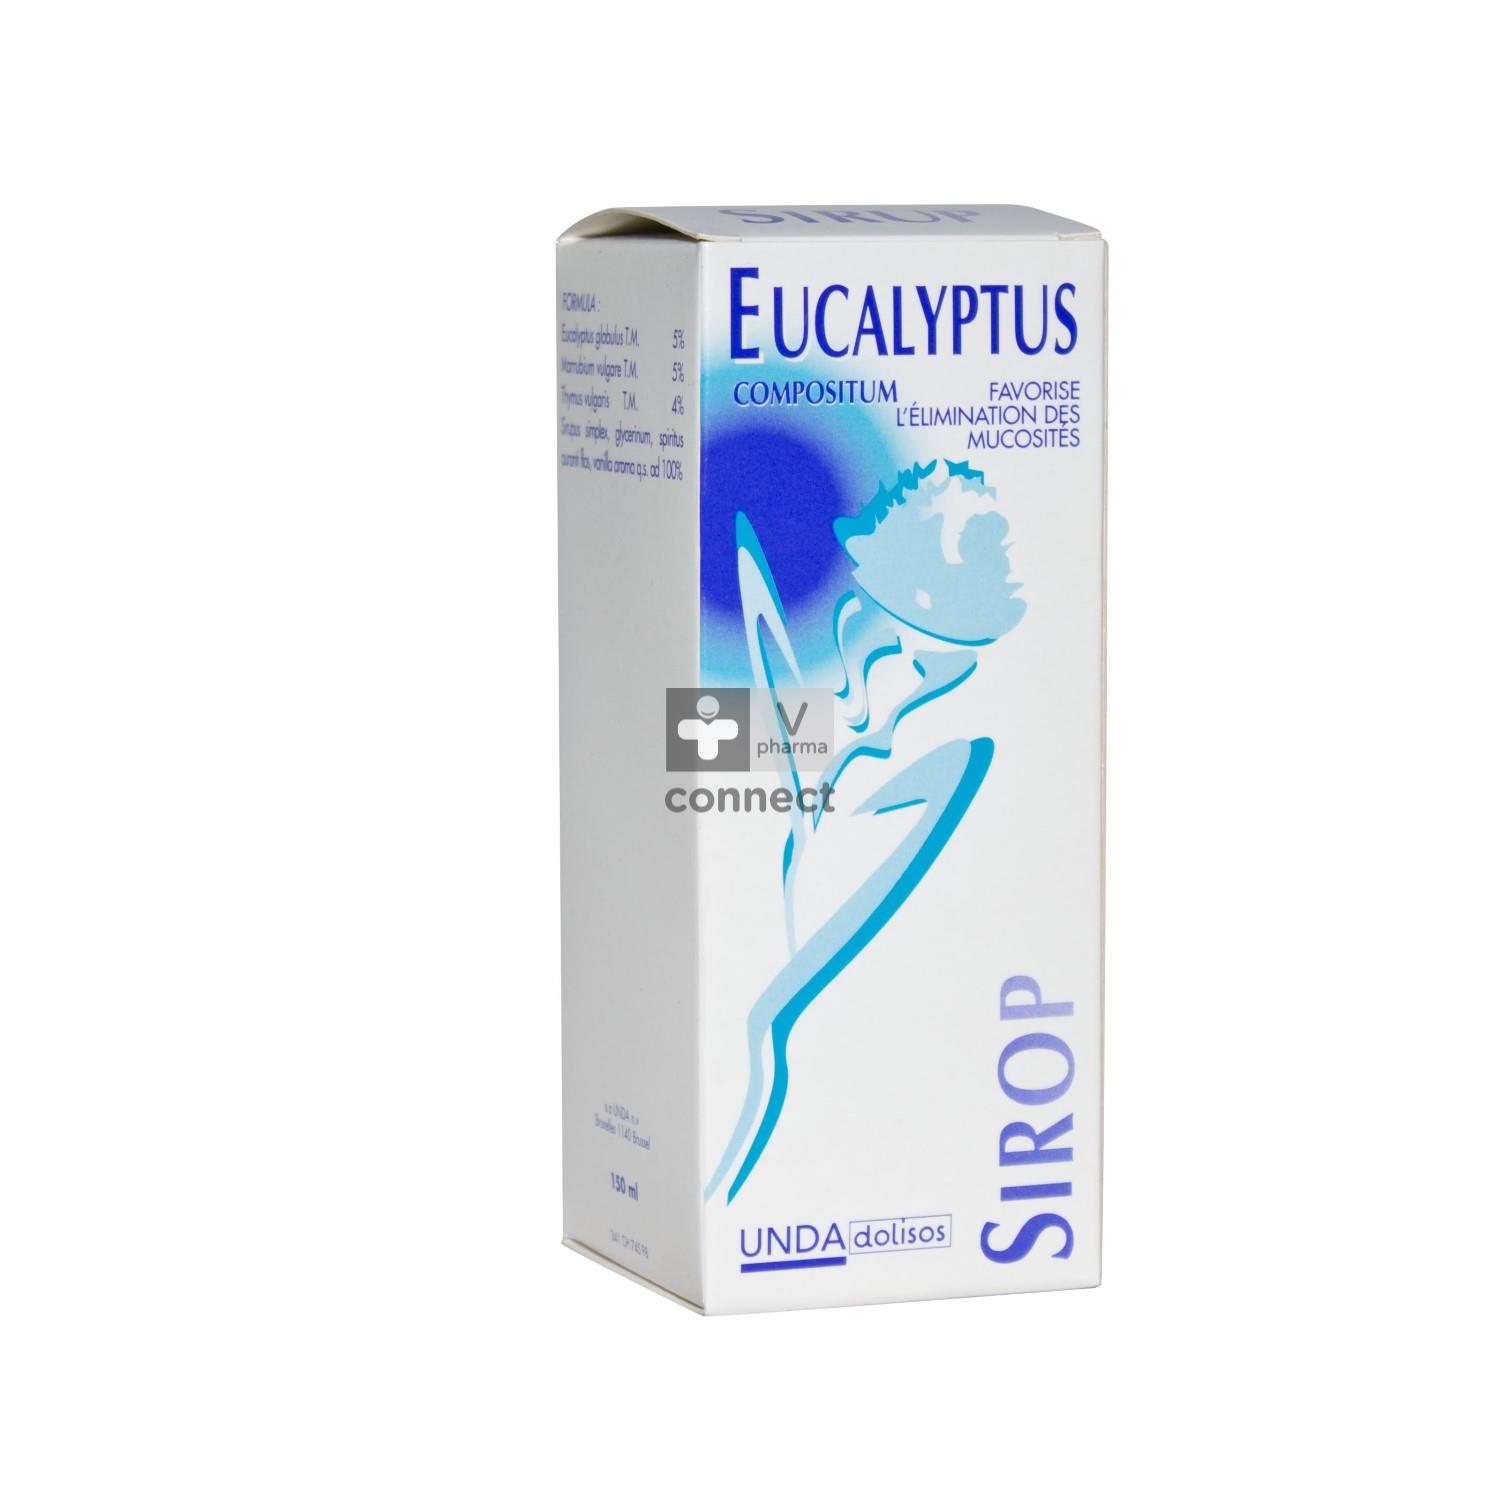 eucalyptol